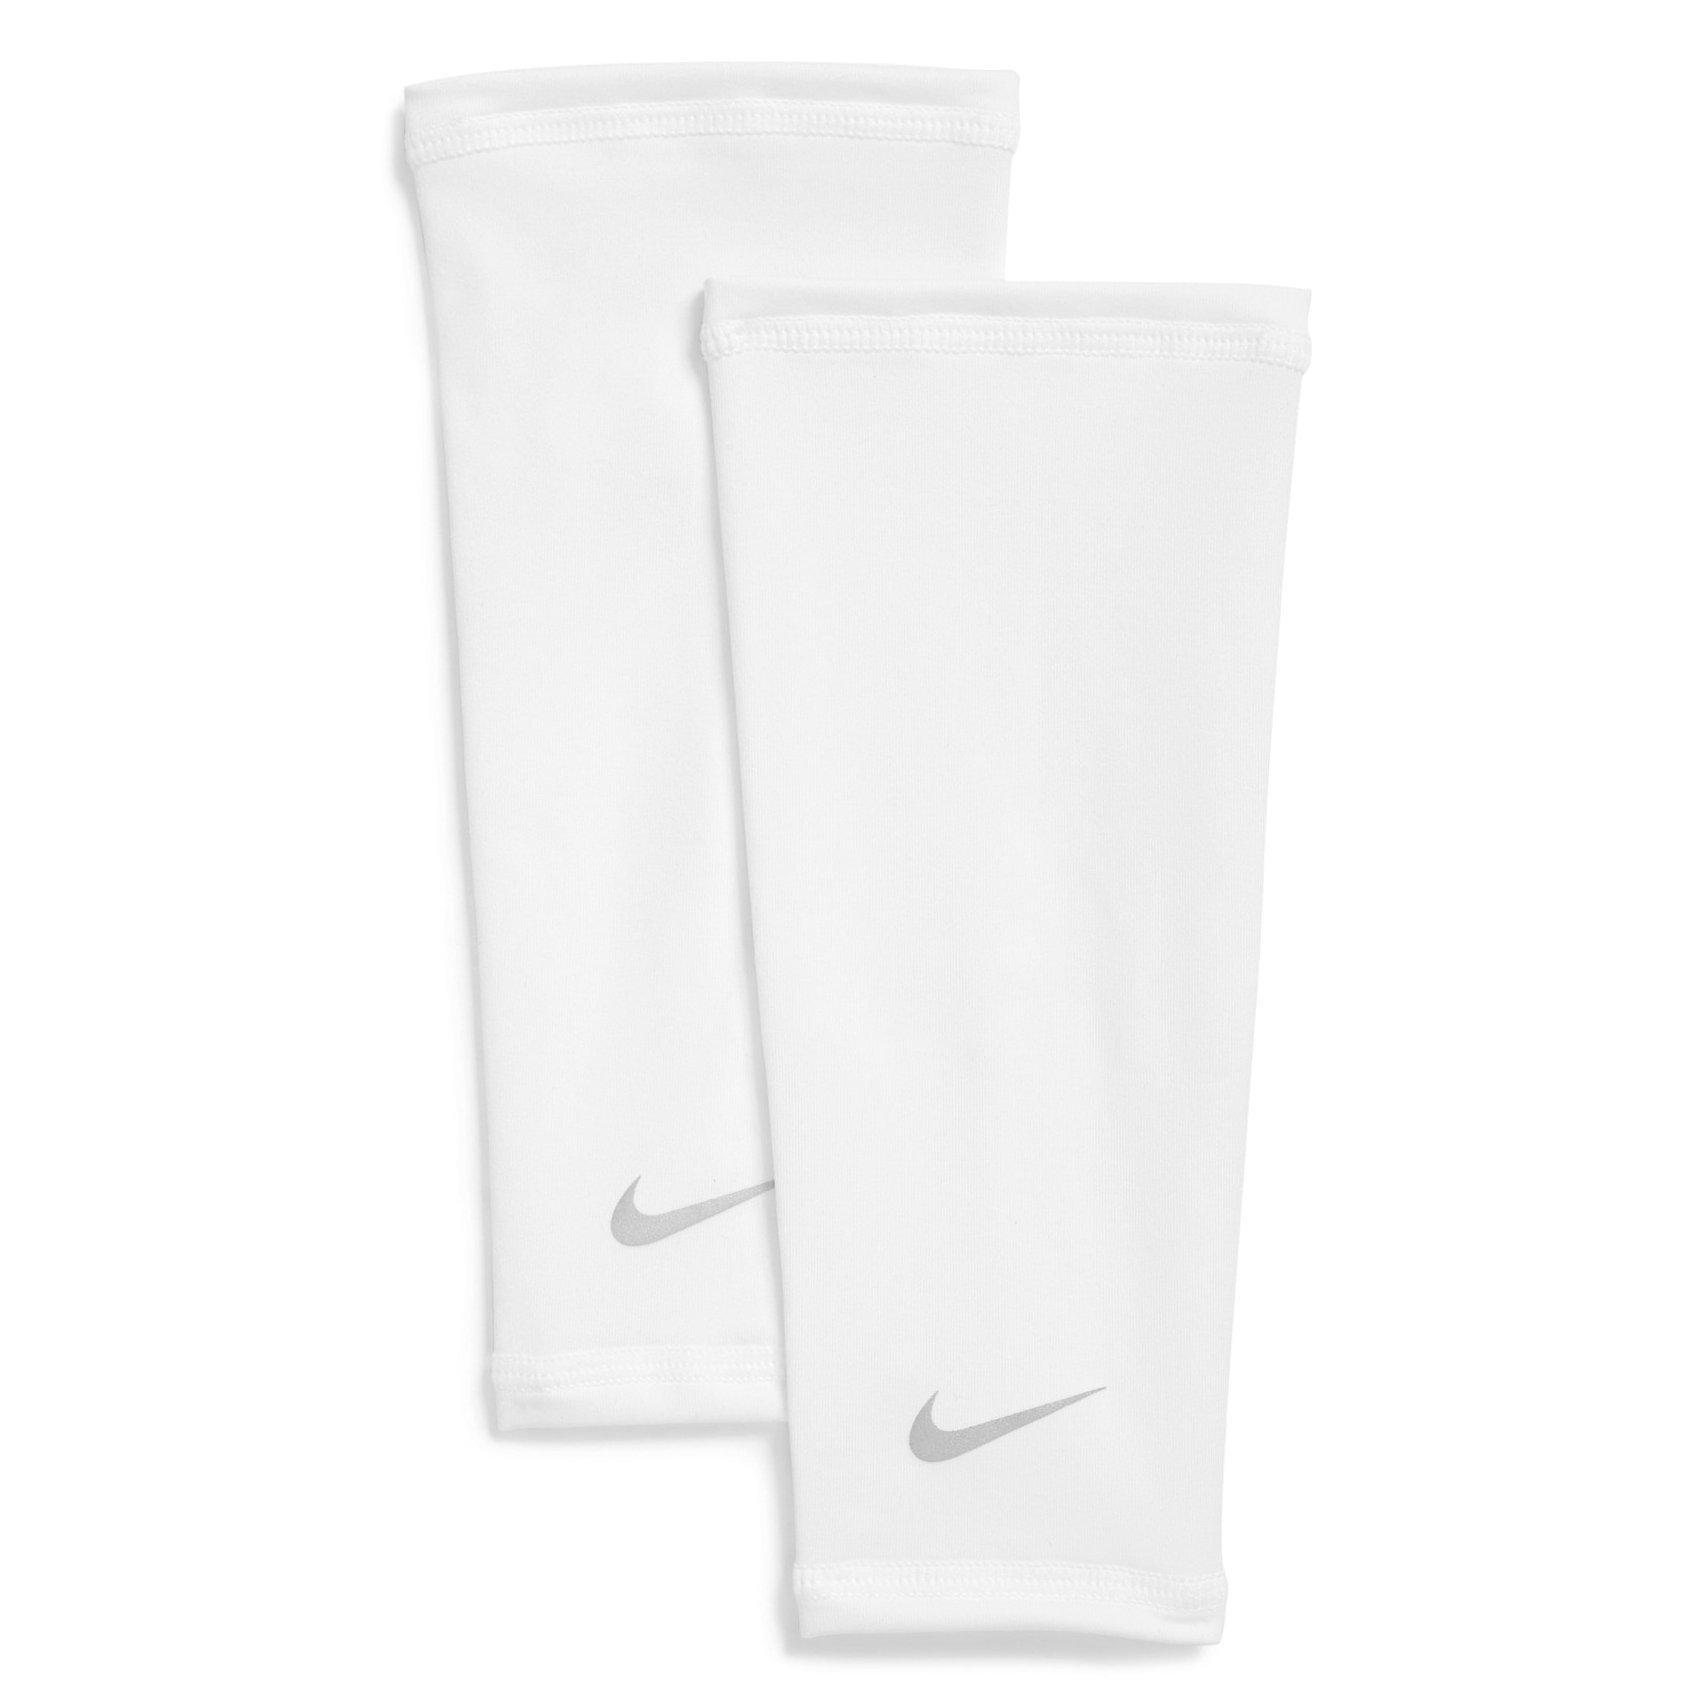 Nike Lightweight Calf Sleeves White 